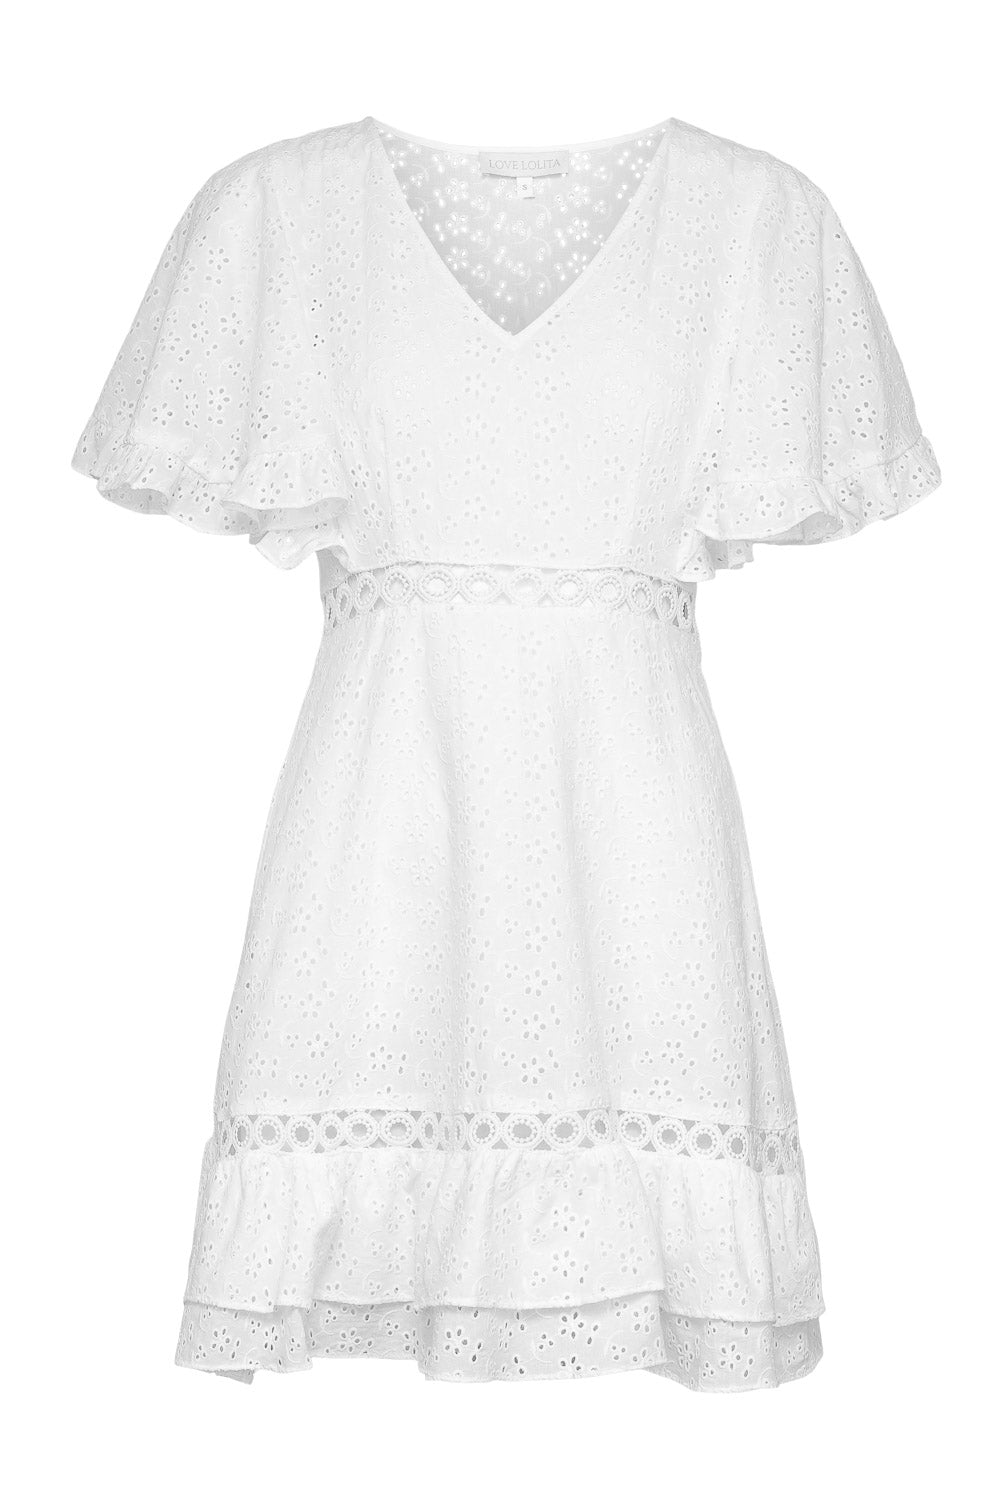 Lucia Dress White